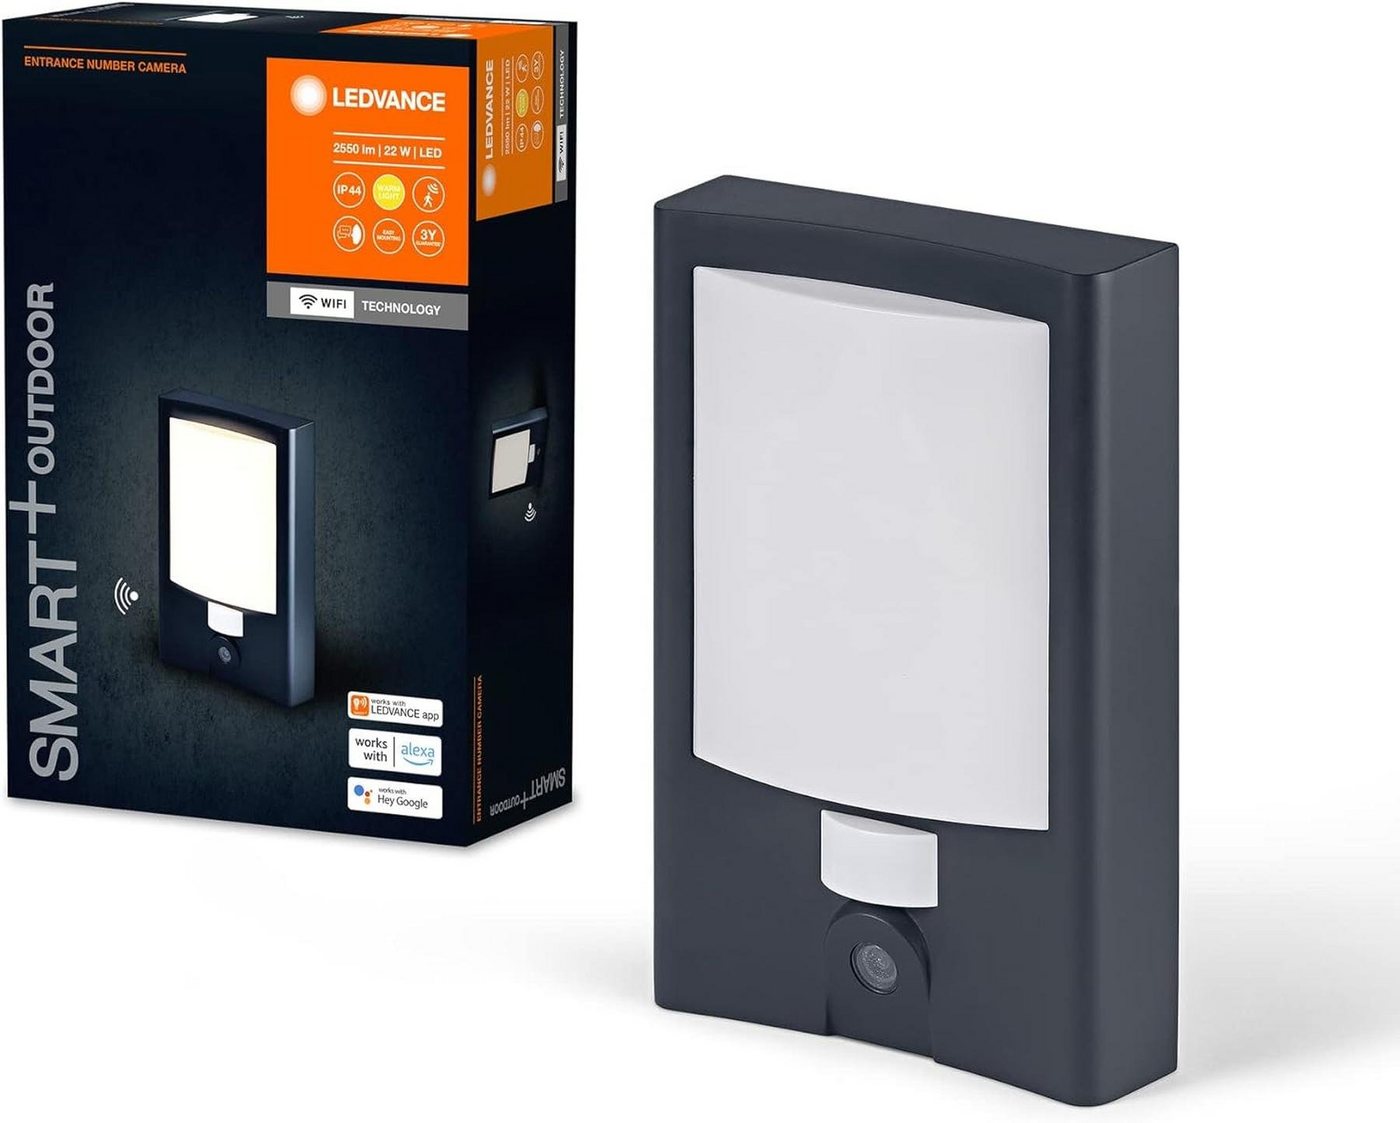 Ledvance Hausnummer LEDVANCE SMART+ Outdoor warmweißes Licht (3000 K) smarte WIFI-Technolo von Ledvance